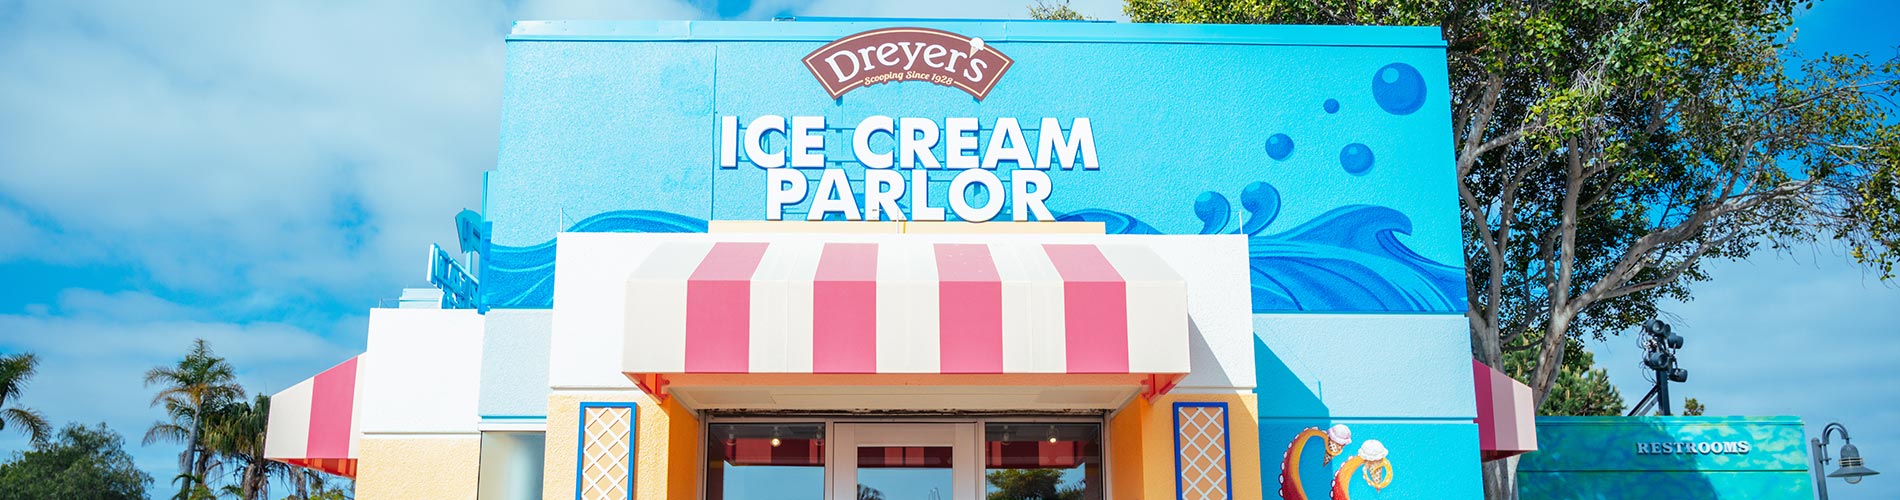 Dreyers Ice Cream Parlor